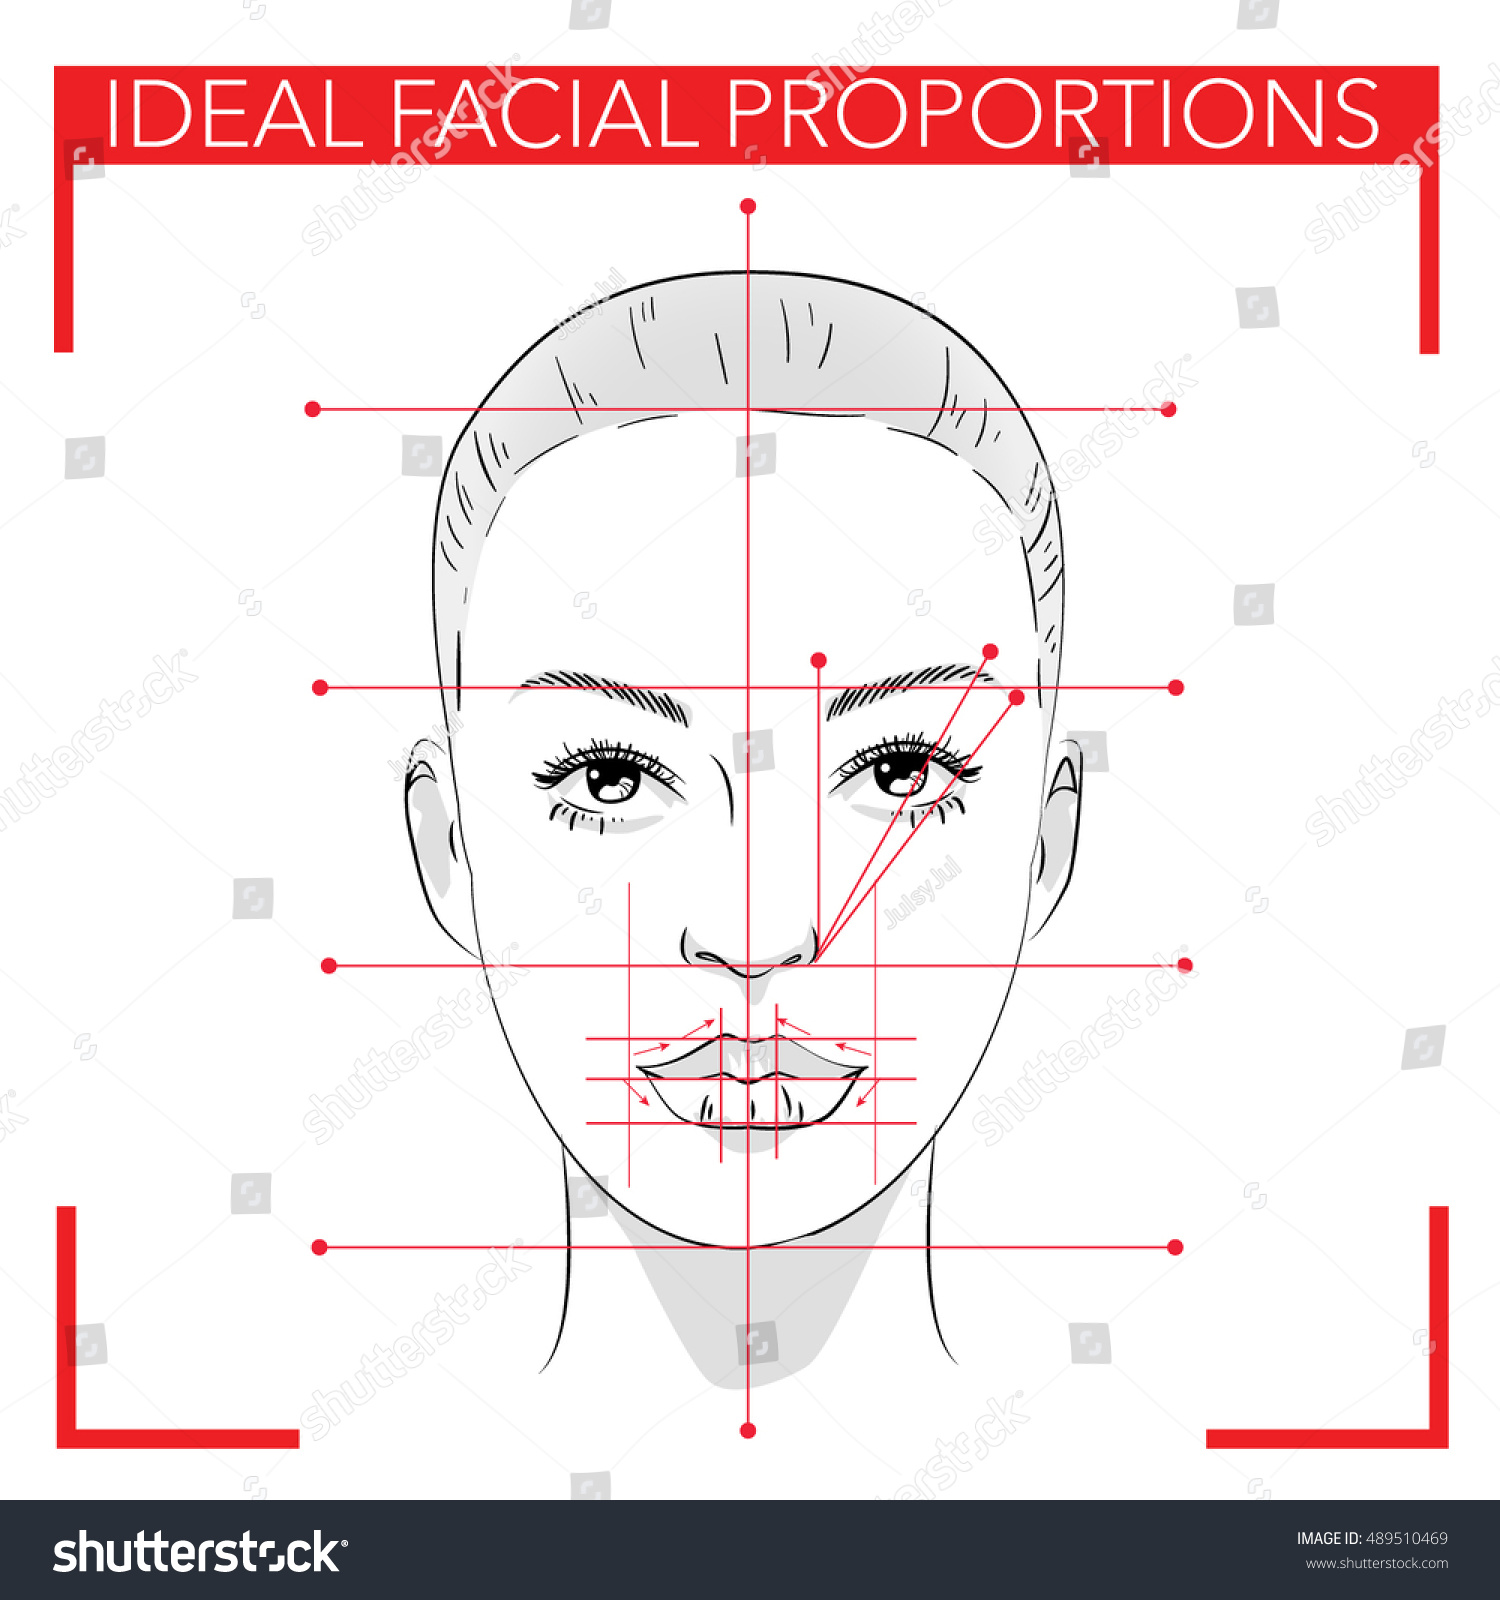 Ideal Facial Proportions 19